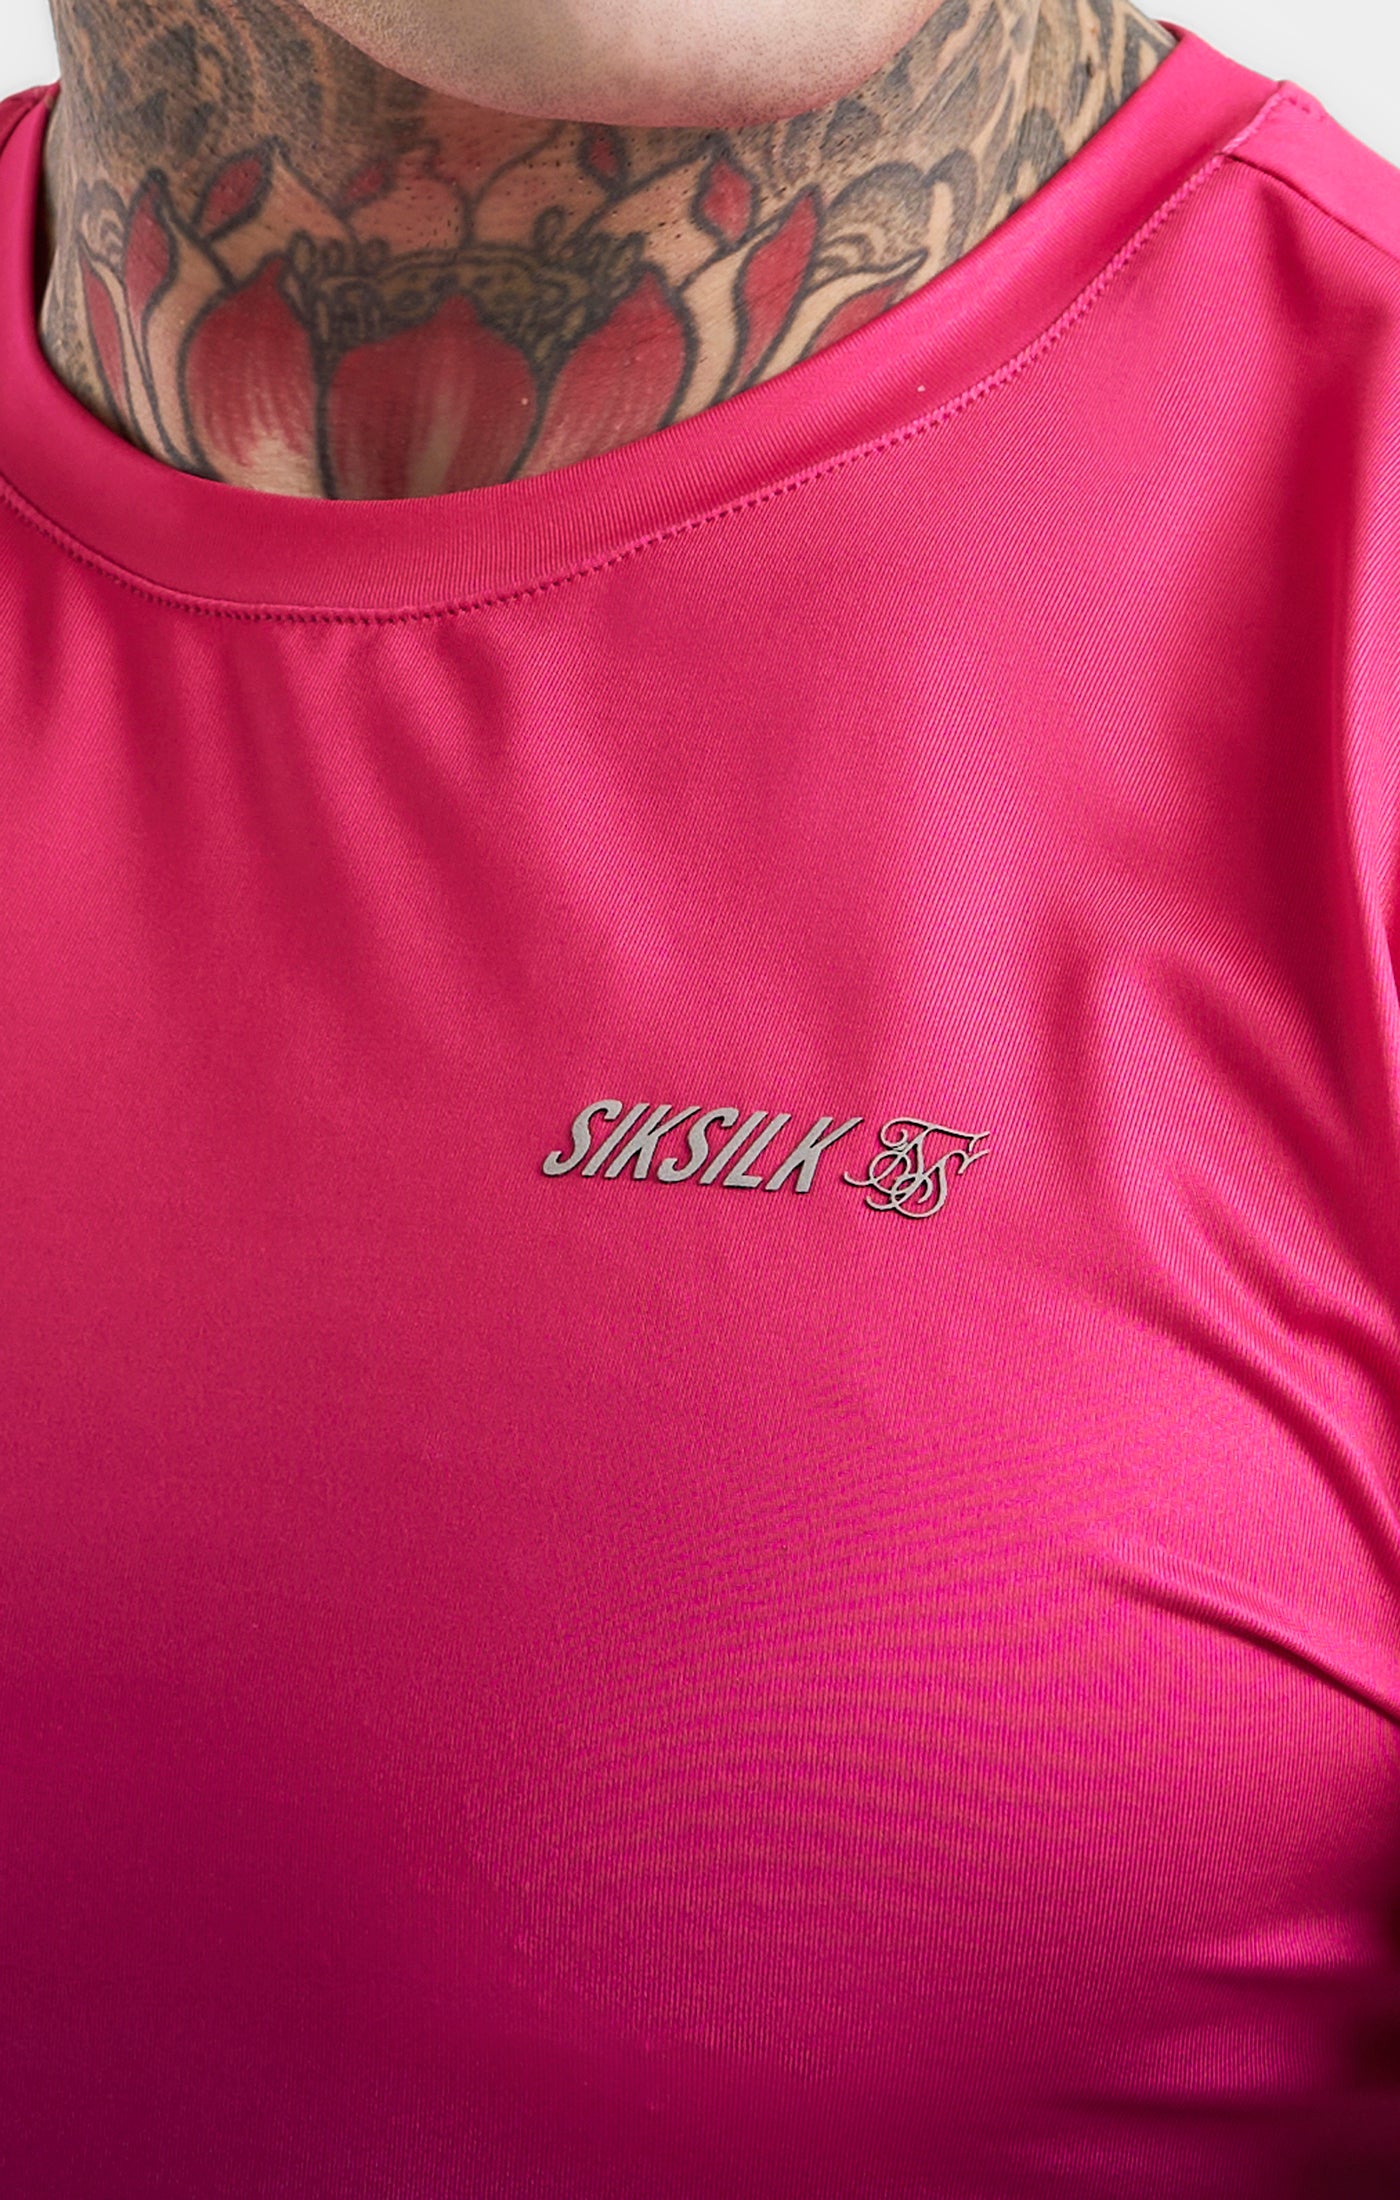 Rosa Fade Sports Muskelfitness T Shirt (1)